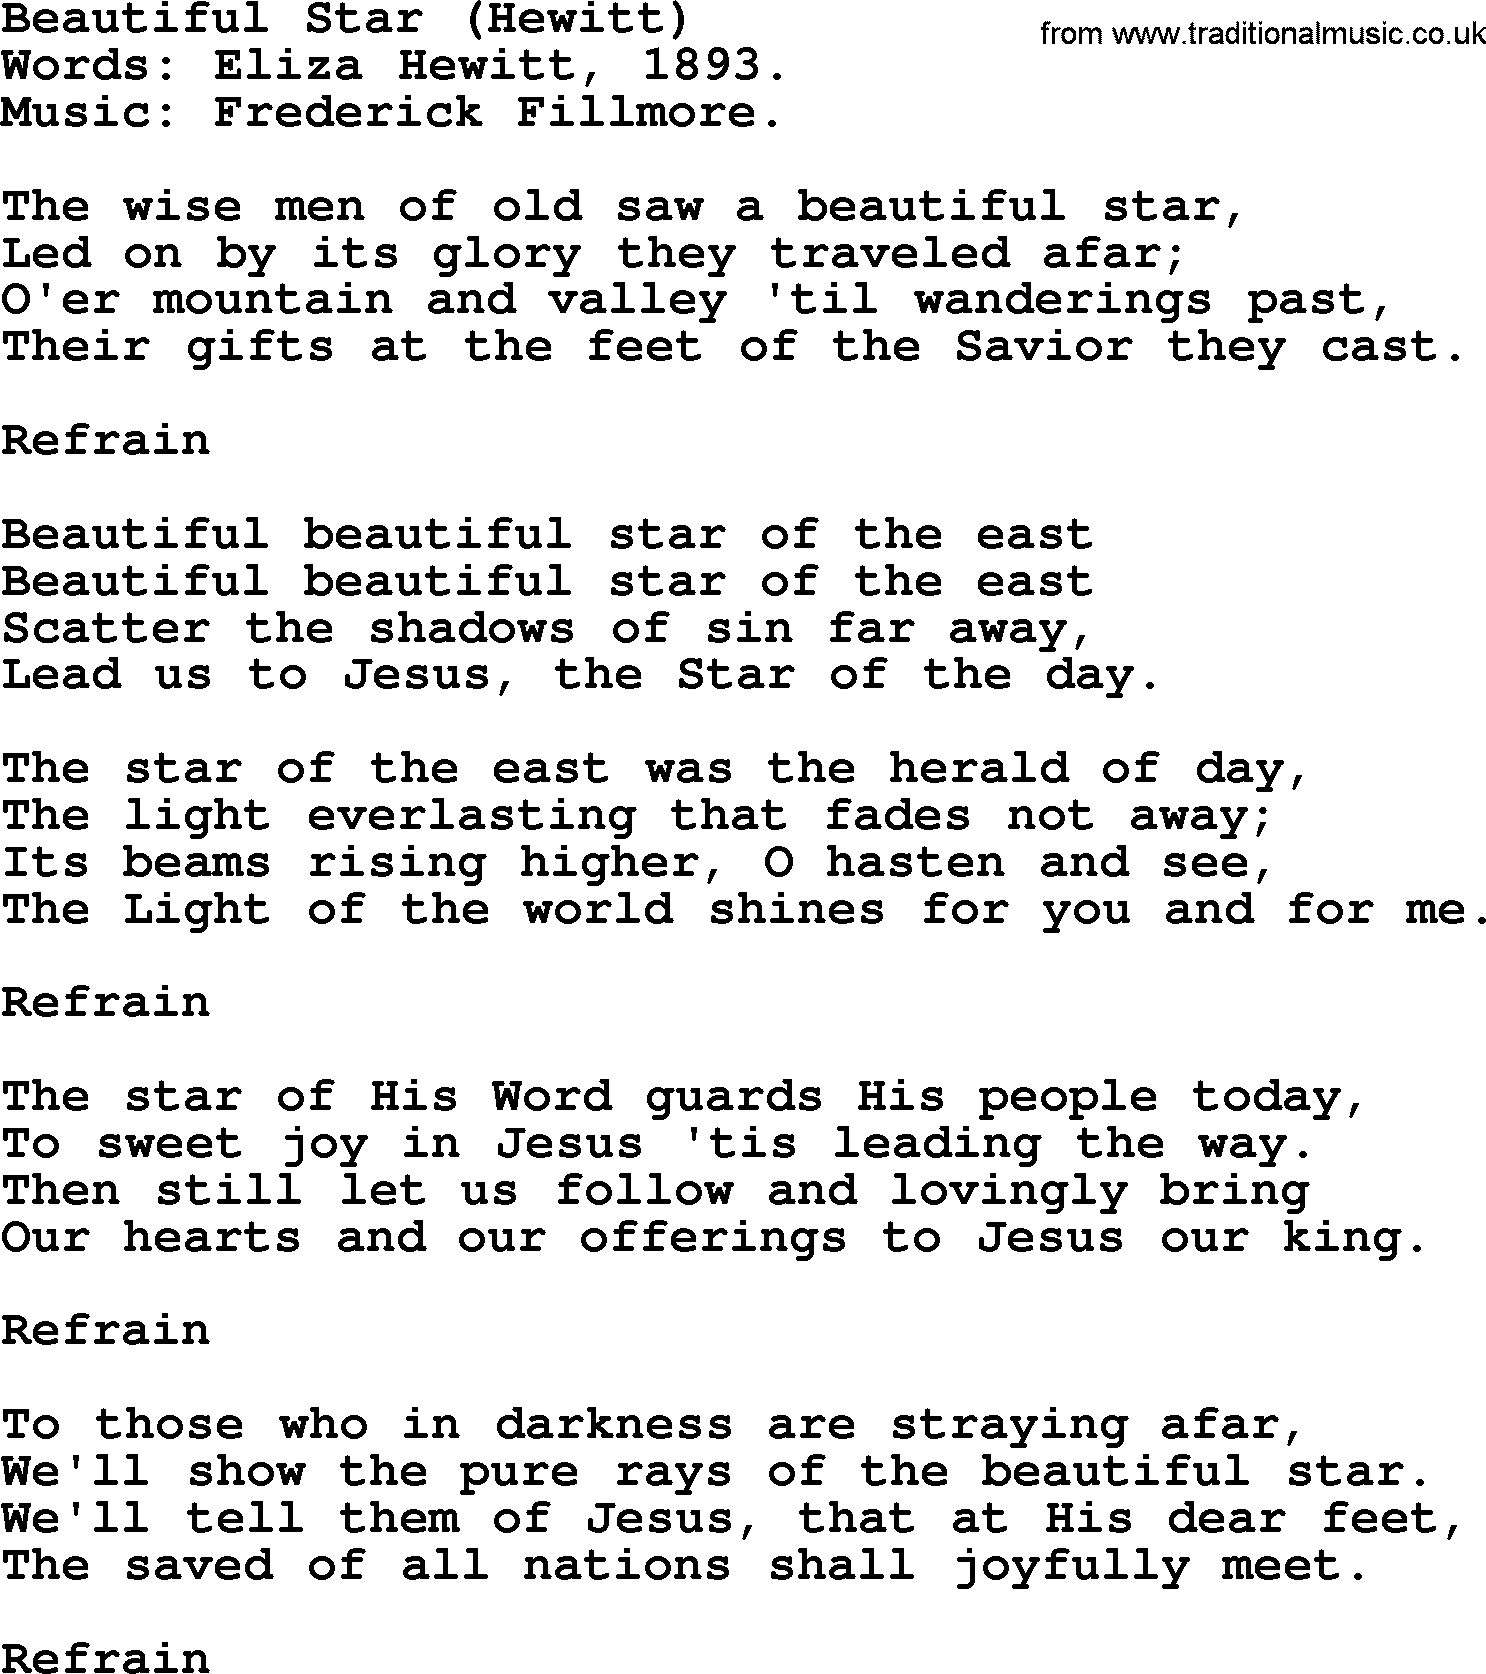 Christmas Hymns, Carols and Songs, title: Beautiful Star (hewitt), lyrics with PDF